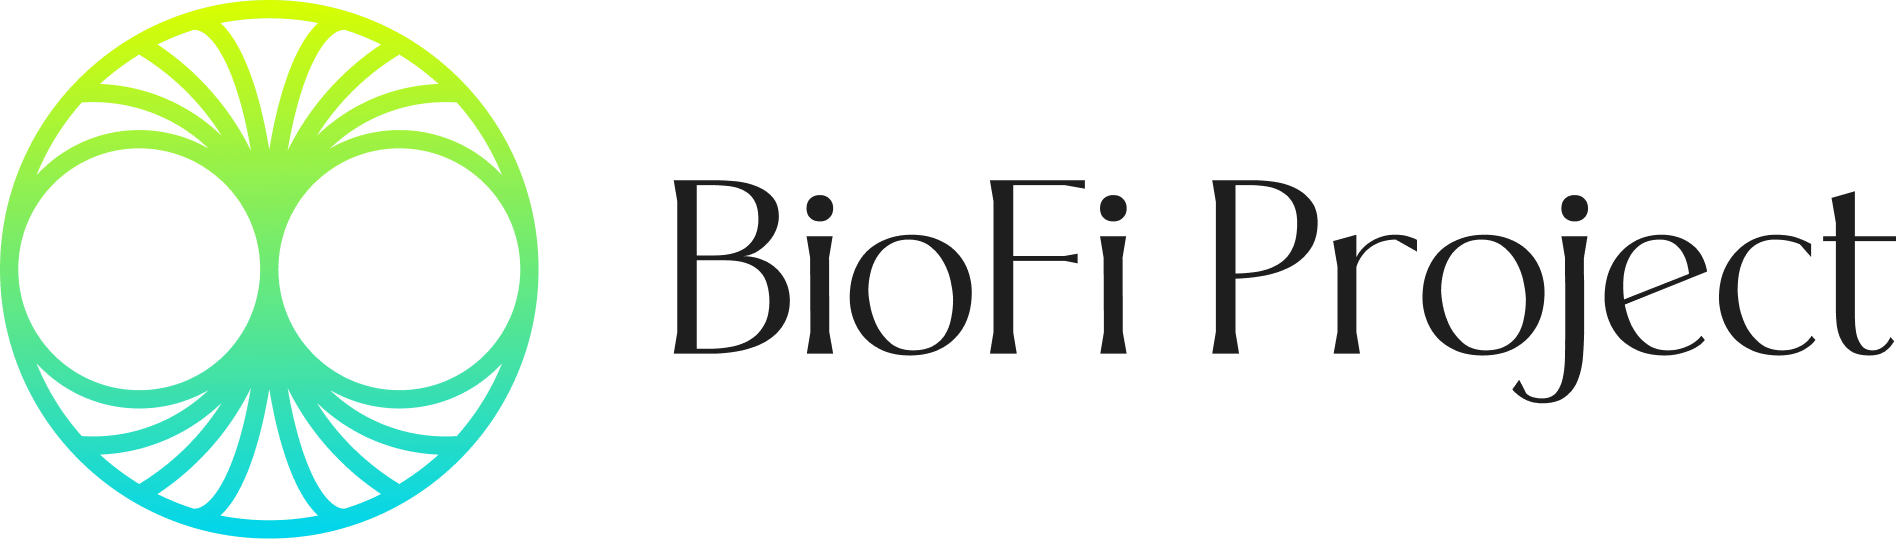 BioFi Project Horizontal Black